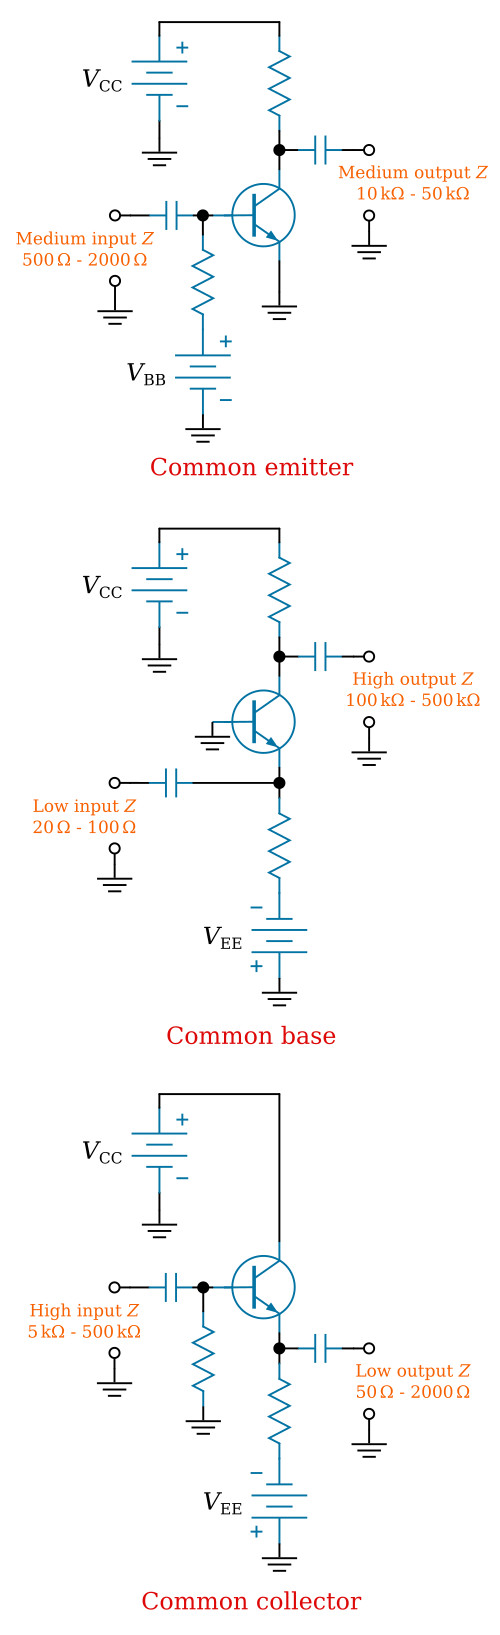 Transistor amplifier configurations